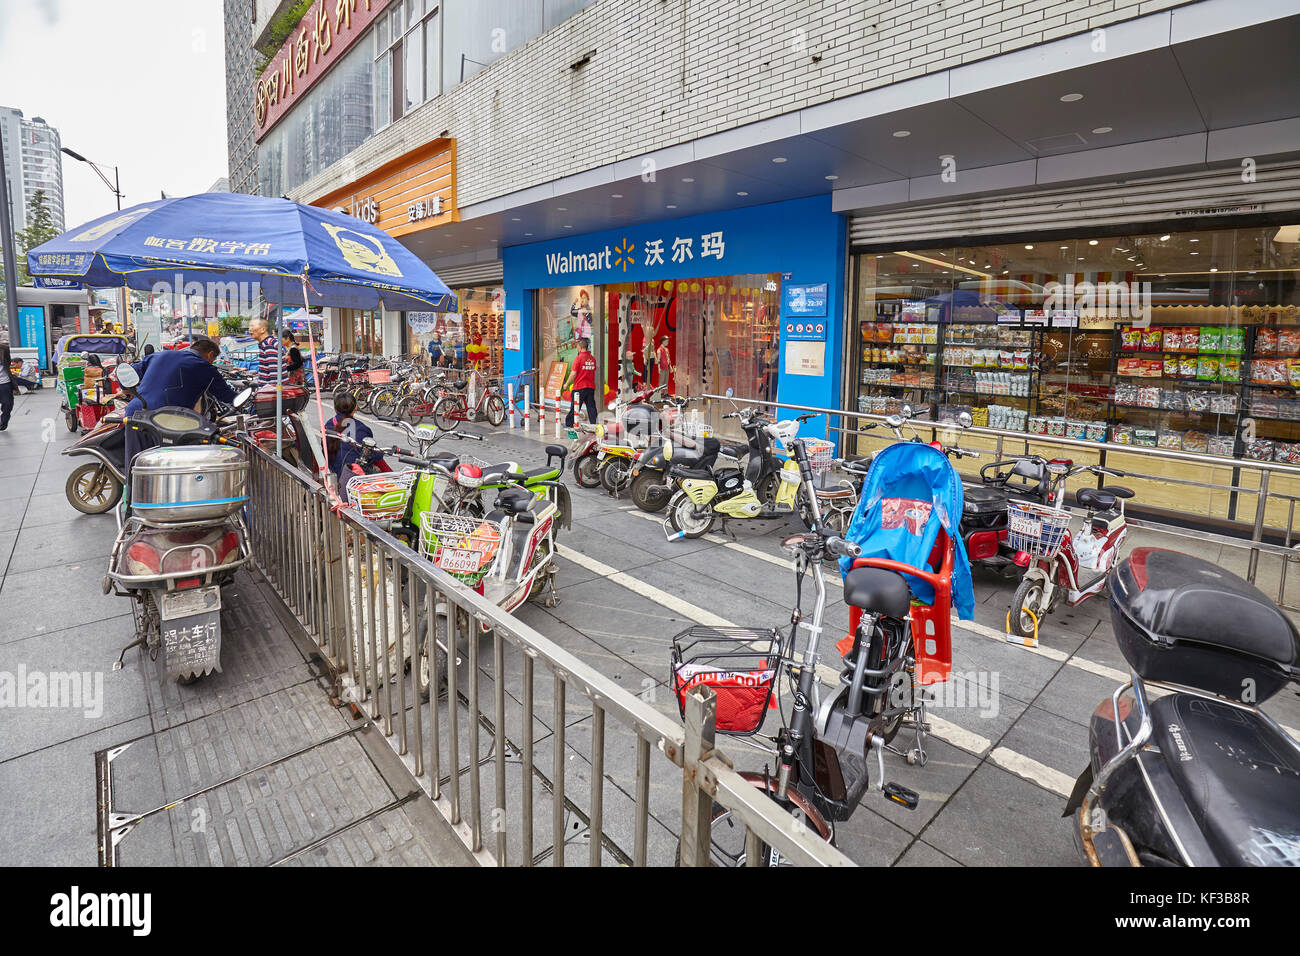 Chengdu, China - September 29, 2017: Walmart store entrance. Stock Photo